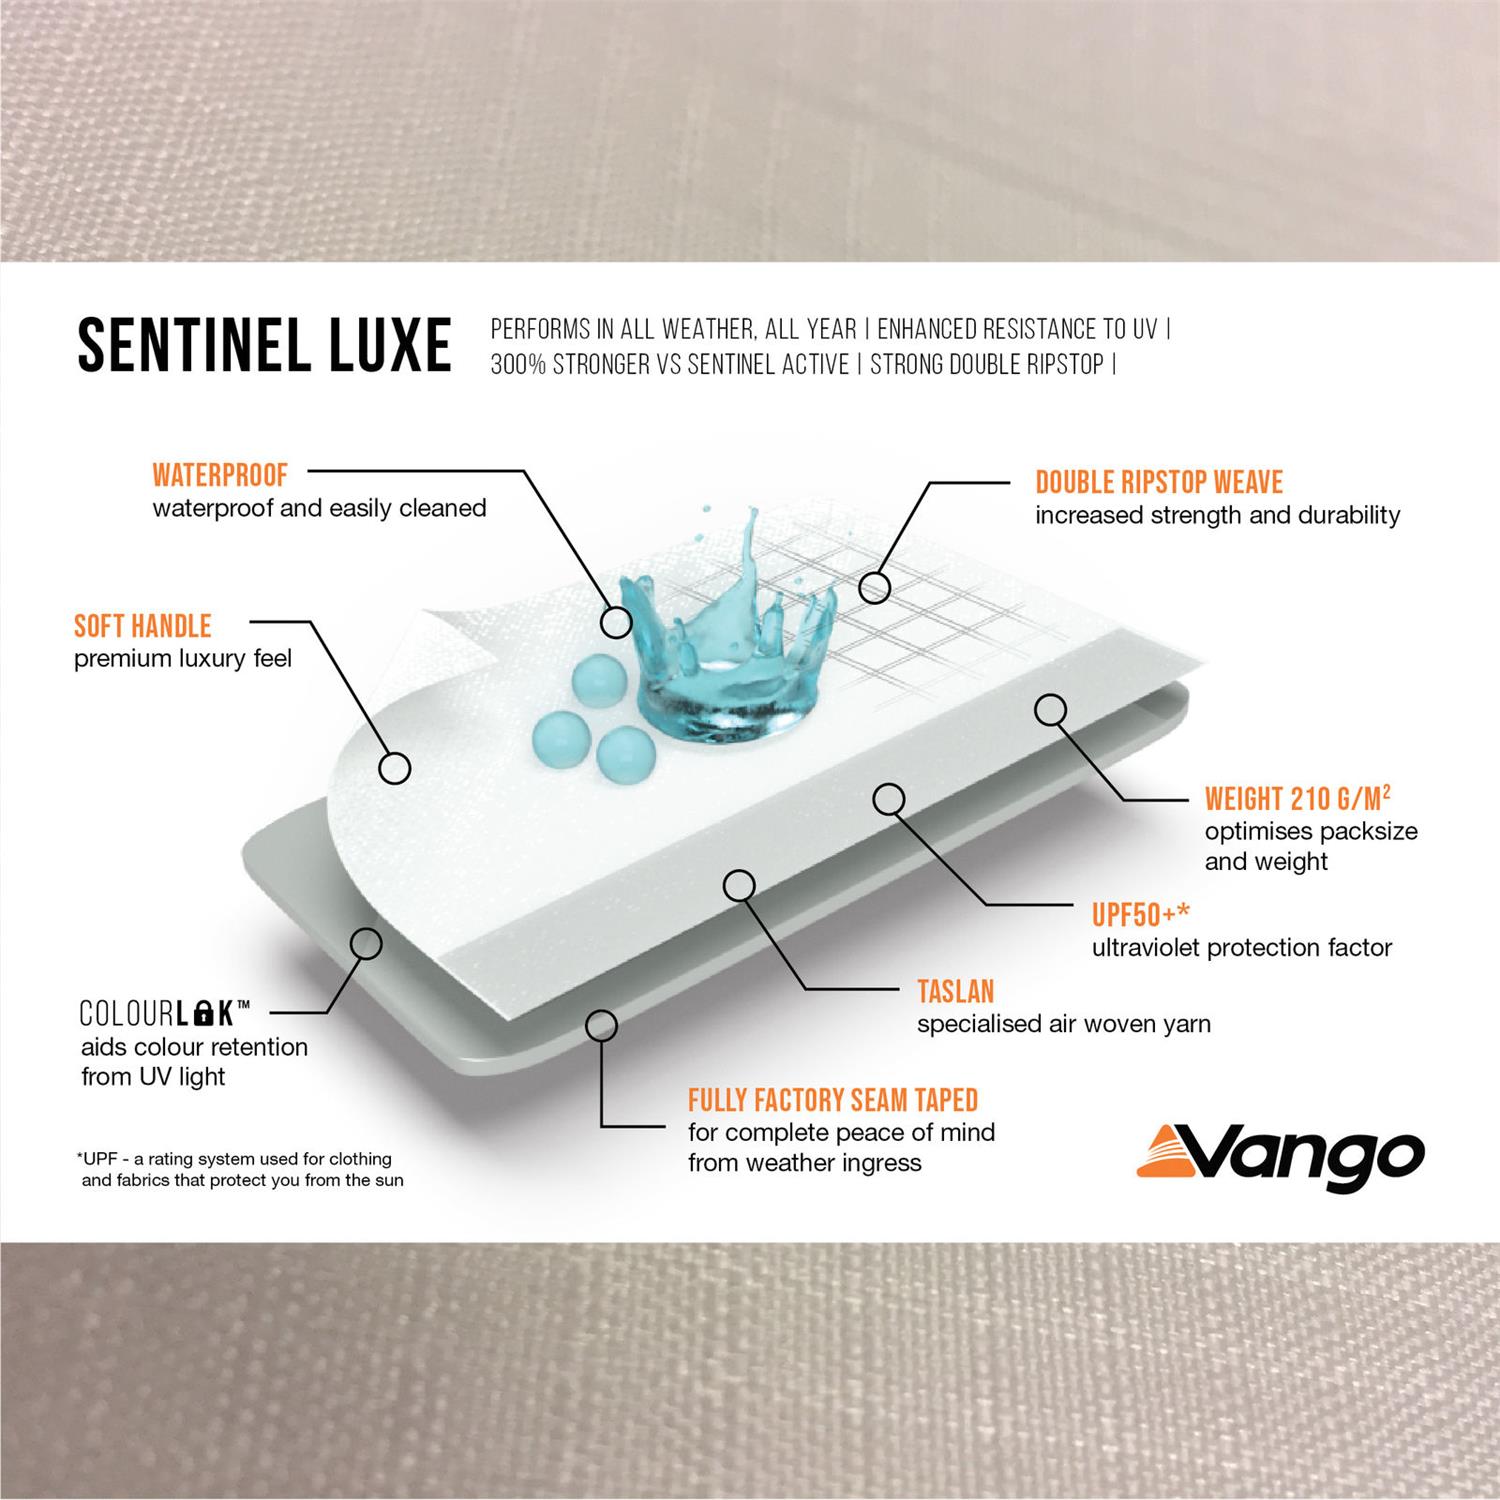 Vango's Sentinel Luxe Fabric.